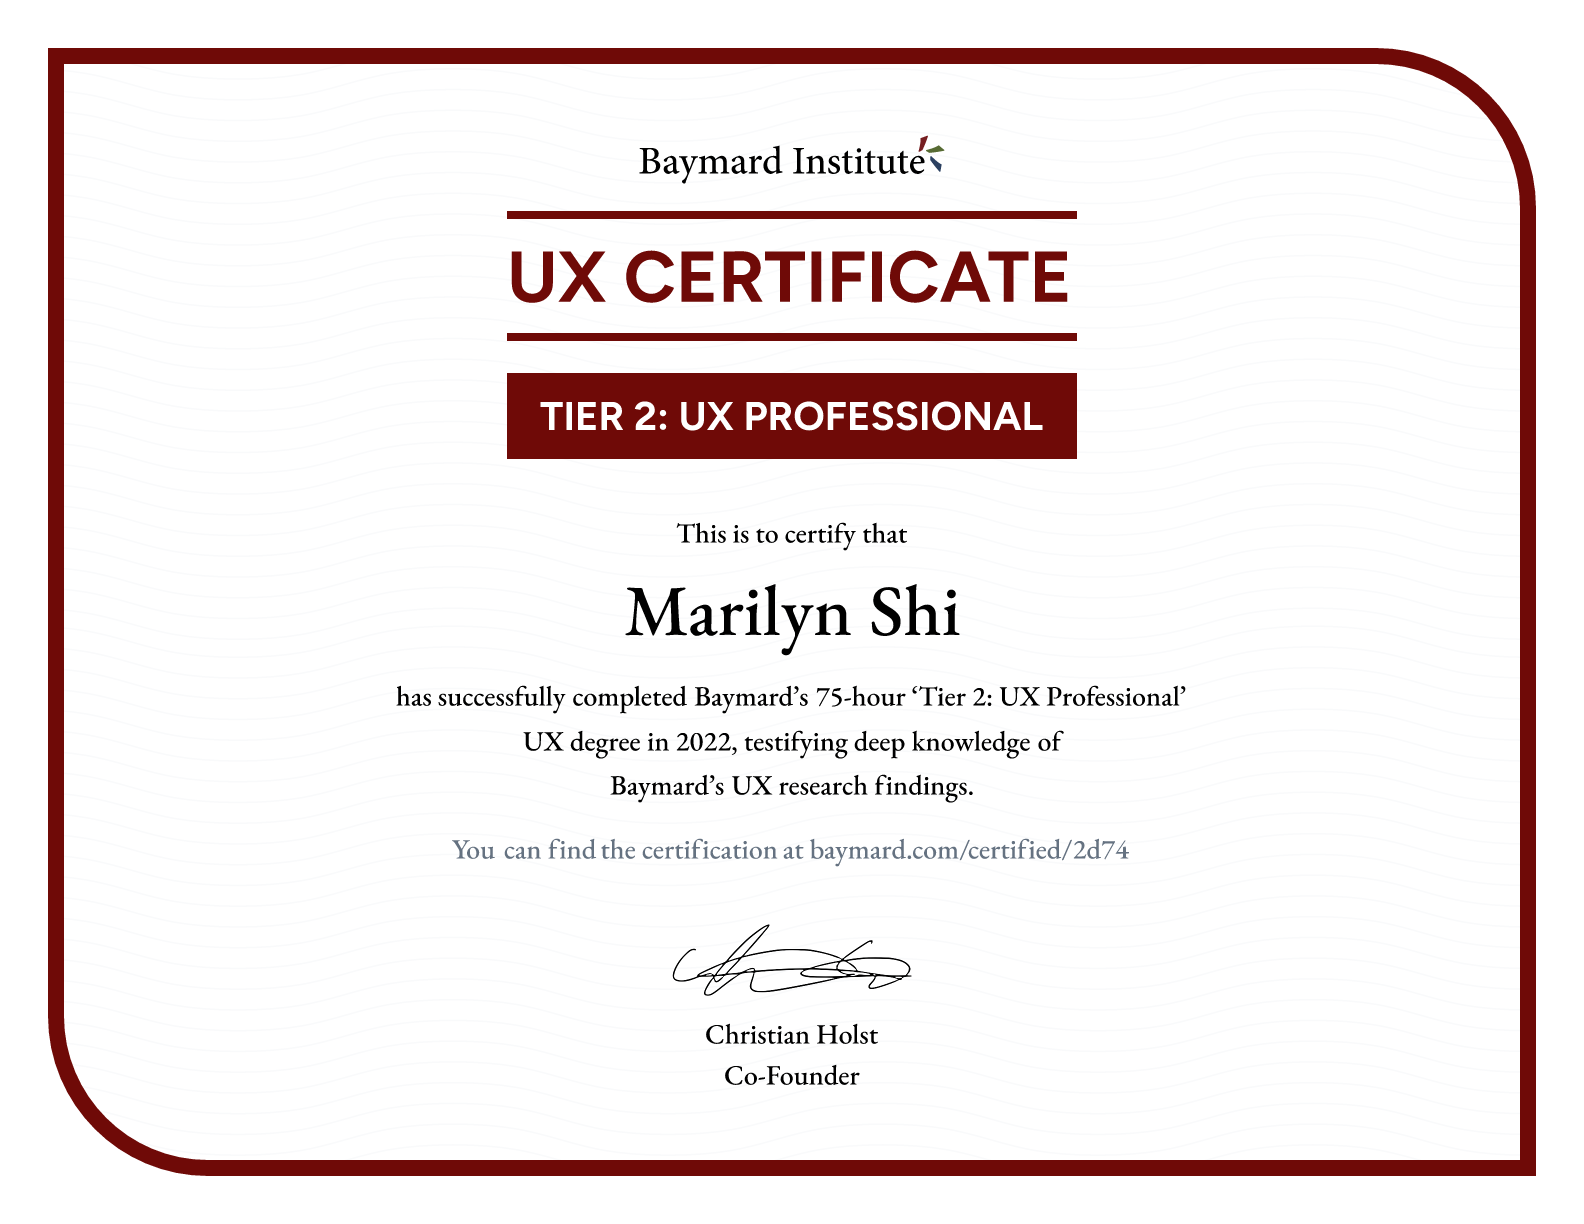 Marilyn Shi’s certificate